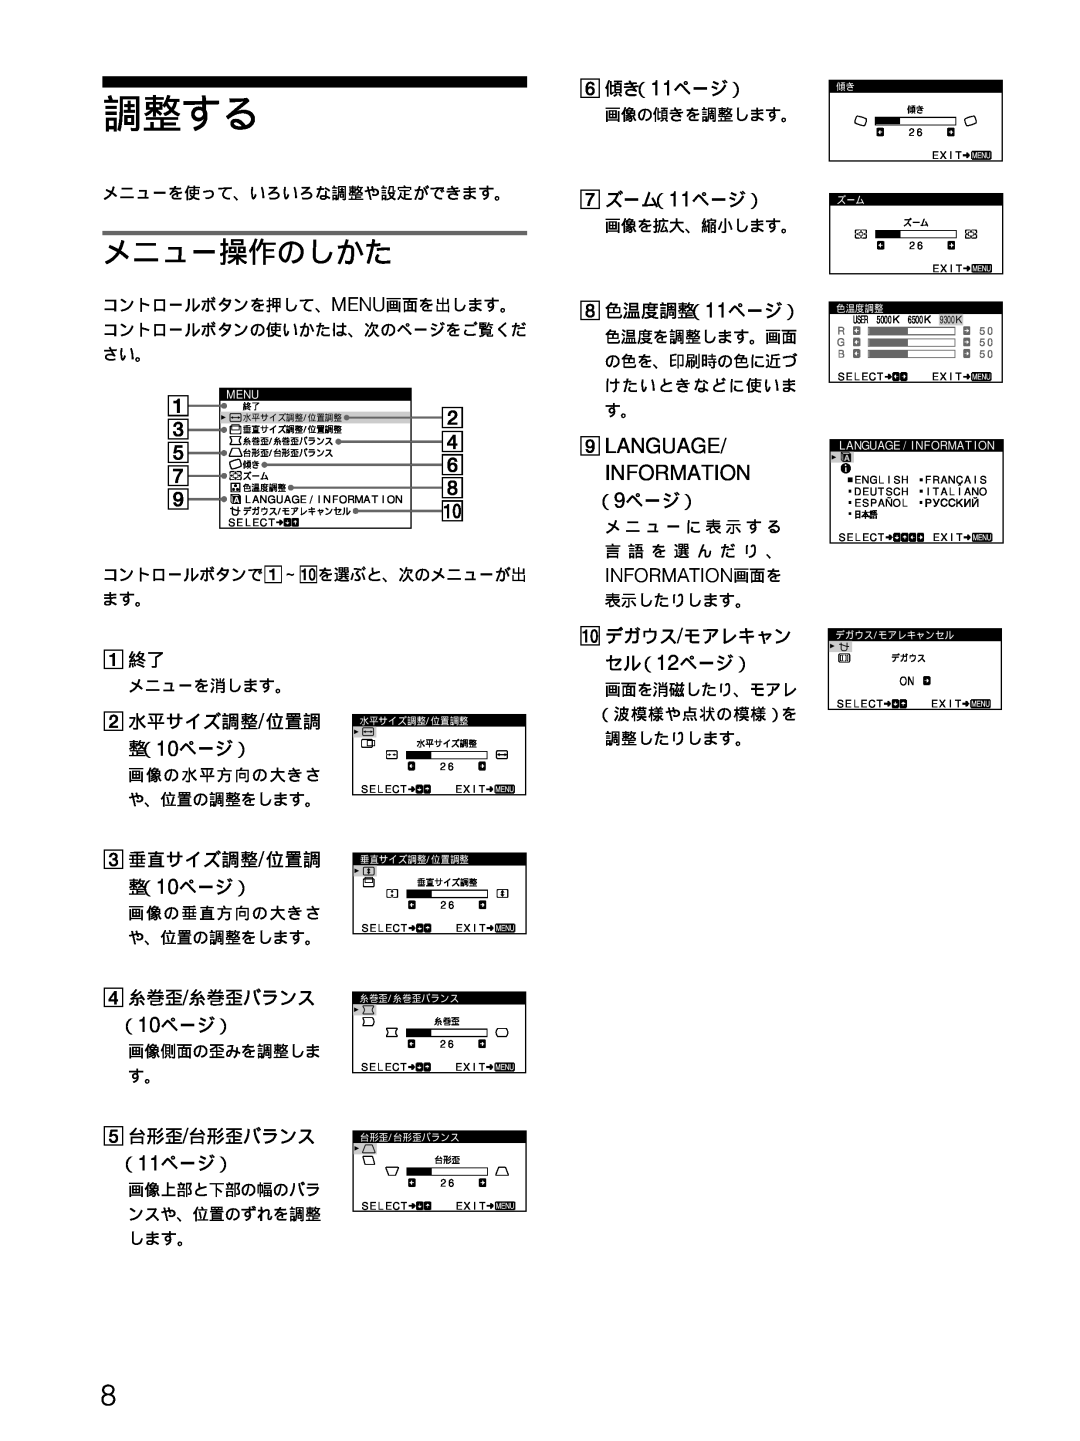 Sony CPD-E100 manual 調整する, メニュー操作のしかた, Language Information, Information画面を 